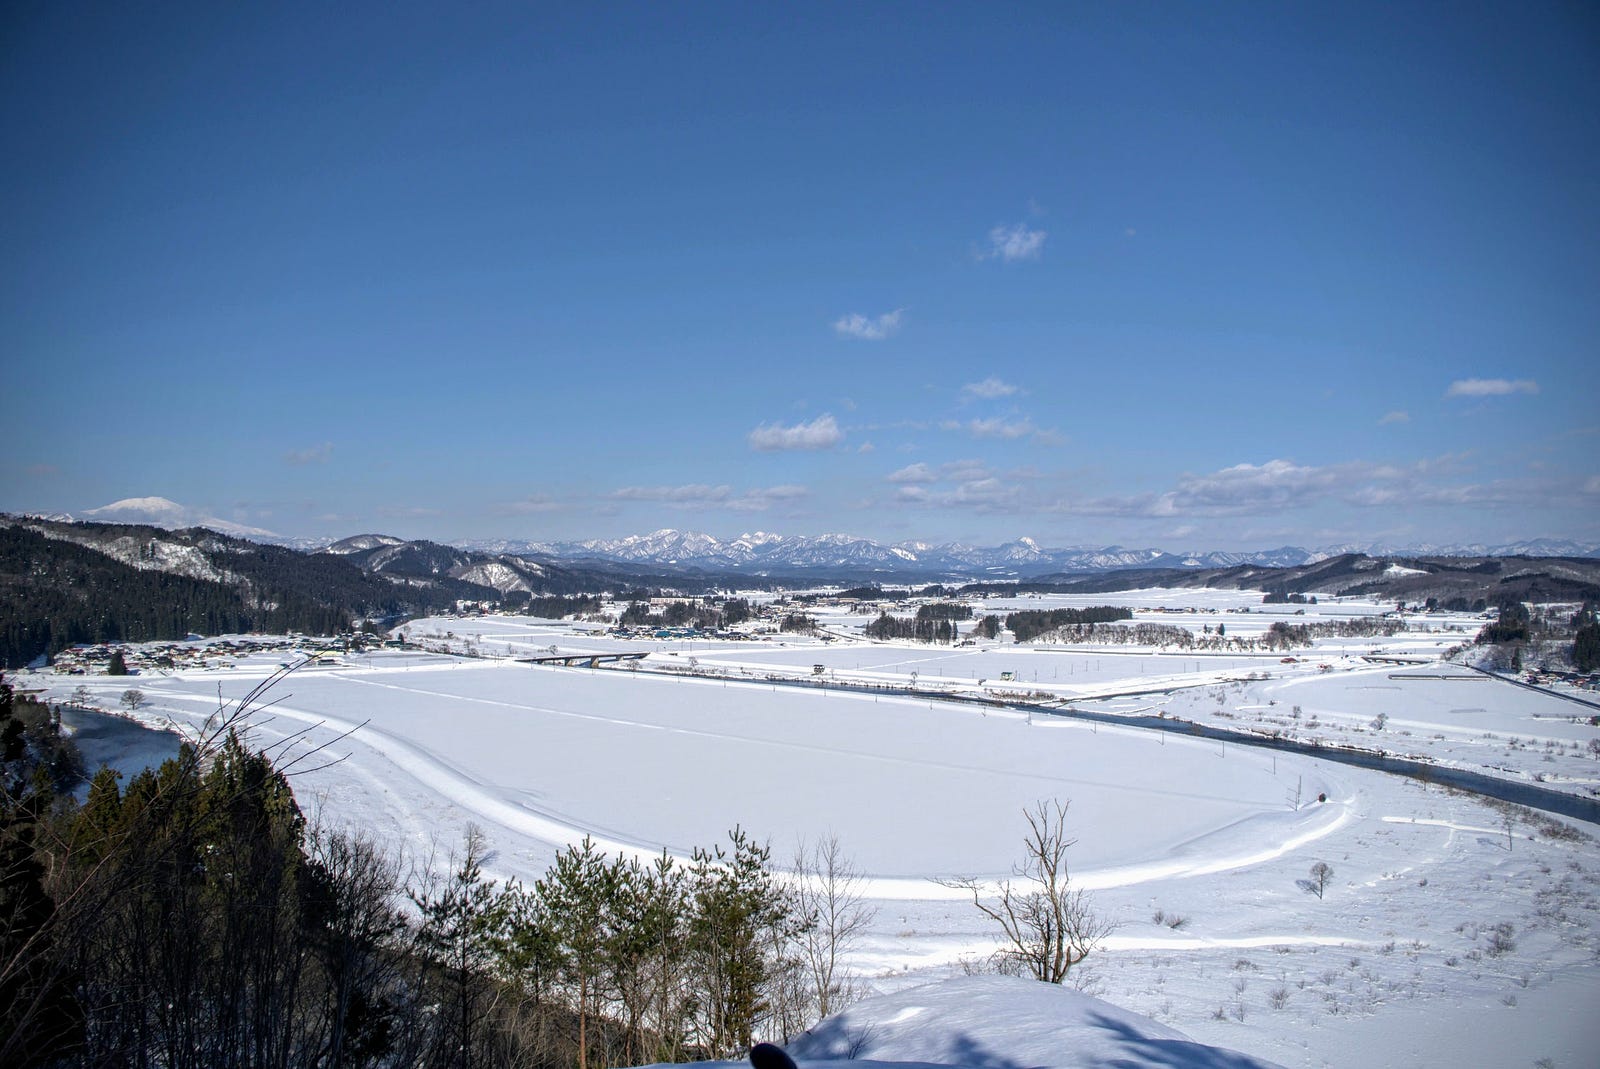 Mt. Chokai and Sakegawa Village covered in snow with the Sakegawa River cutting across